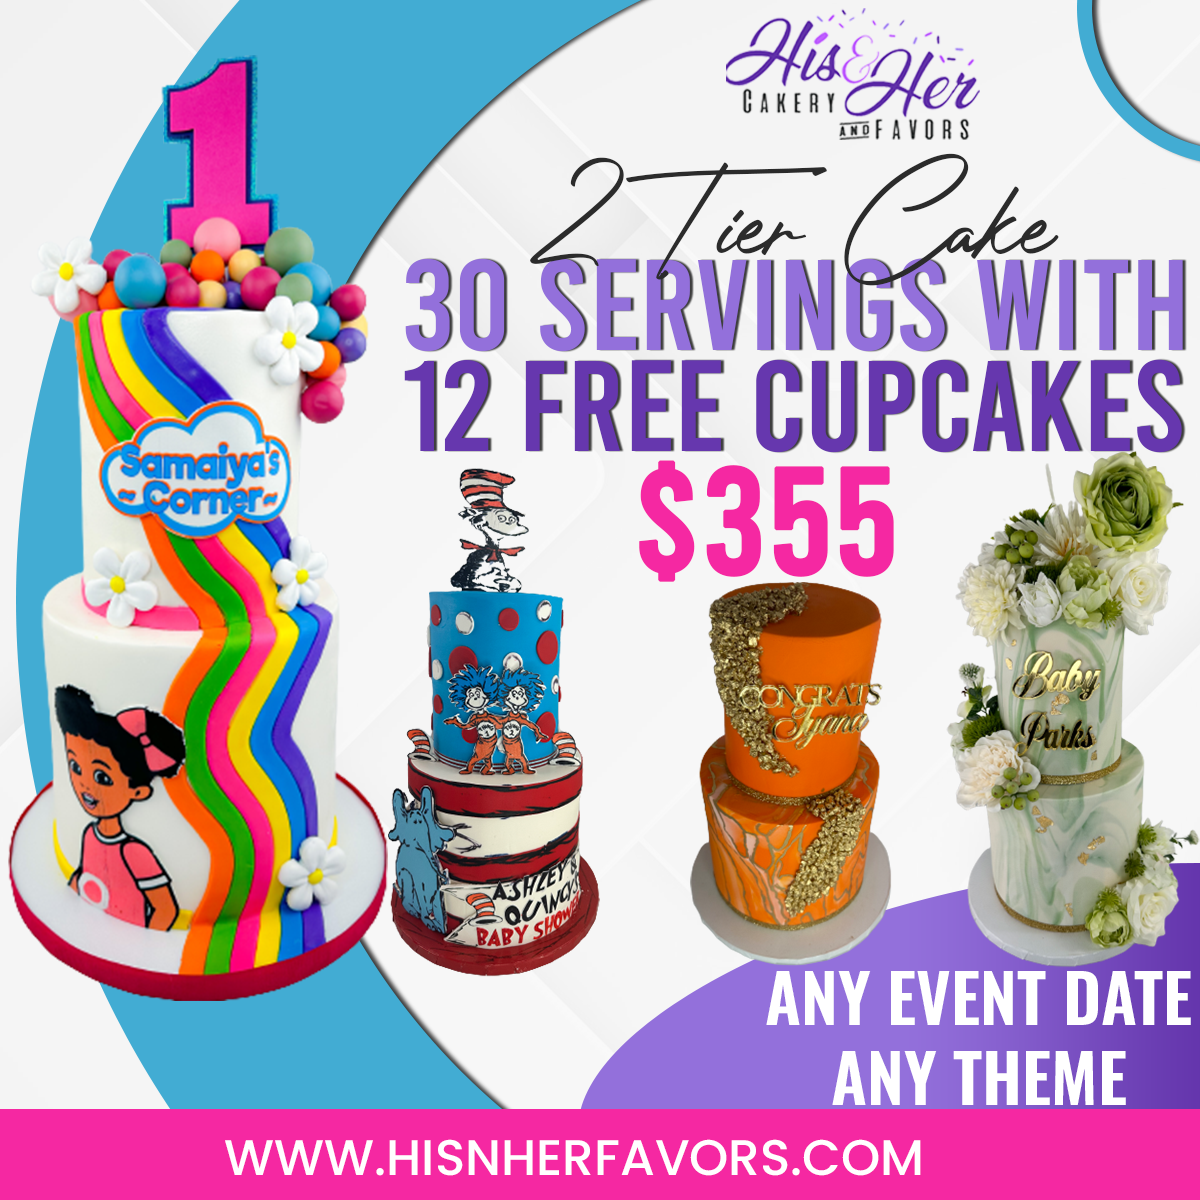 2 TIER CAKE ( 30 SERVINGS) & 12 FREE CUPCAKES * ANNIVERSARY  SALE